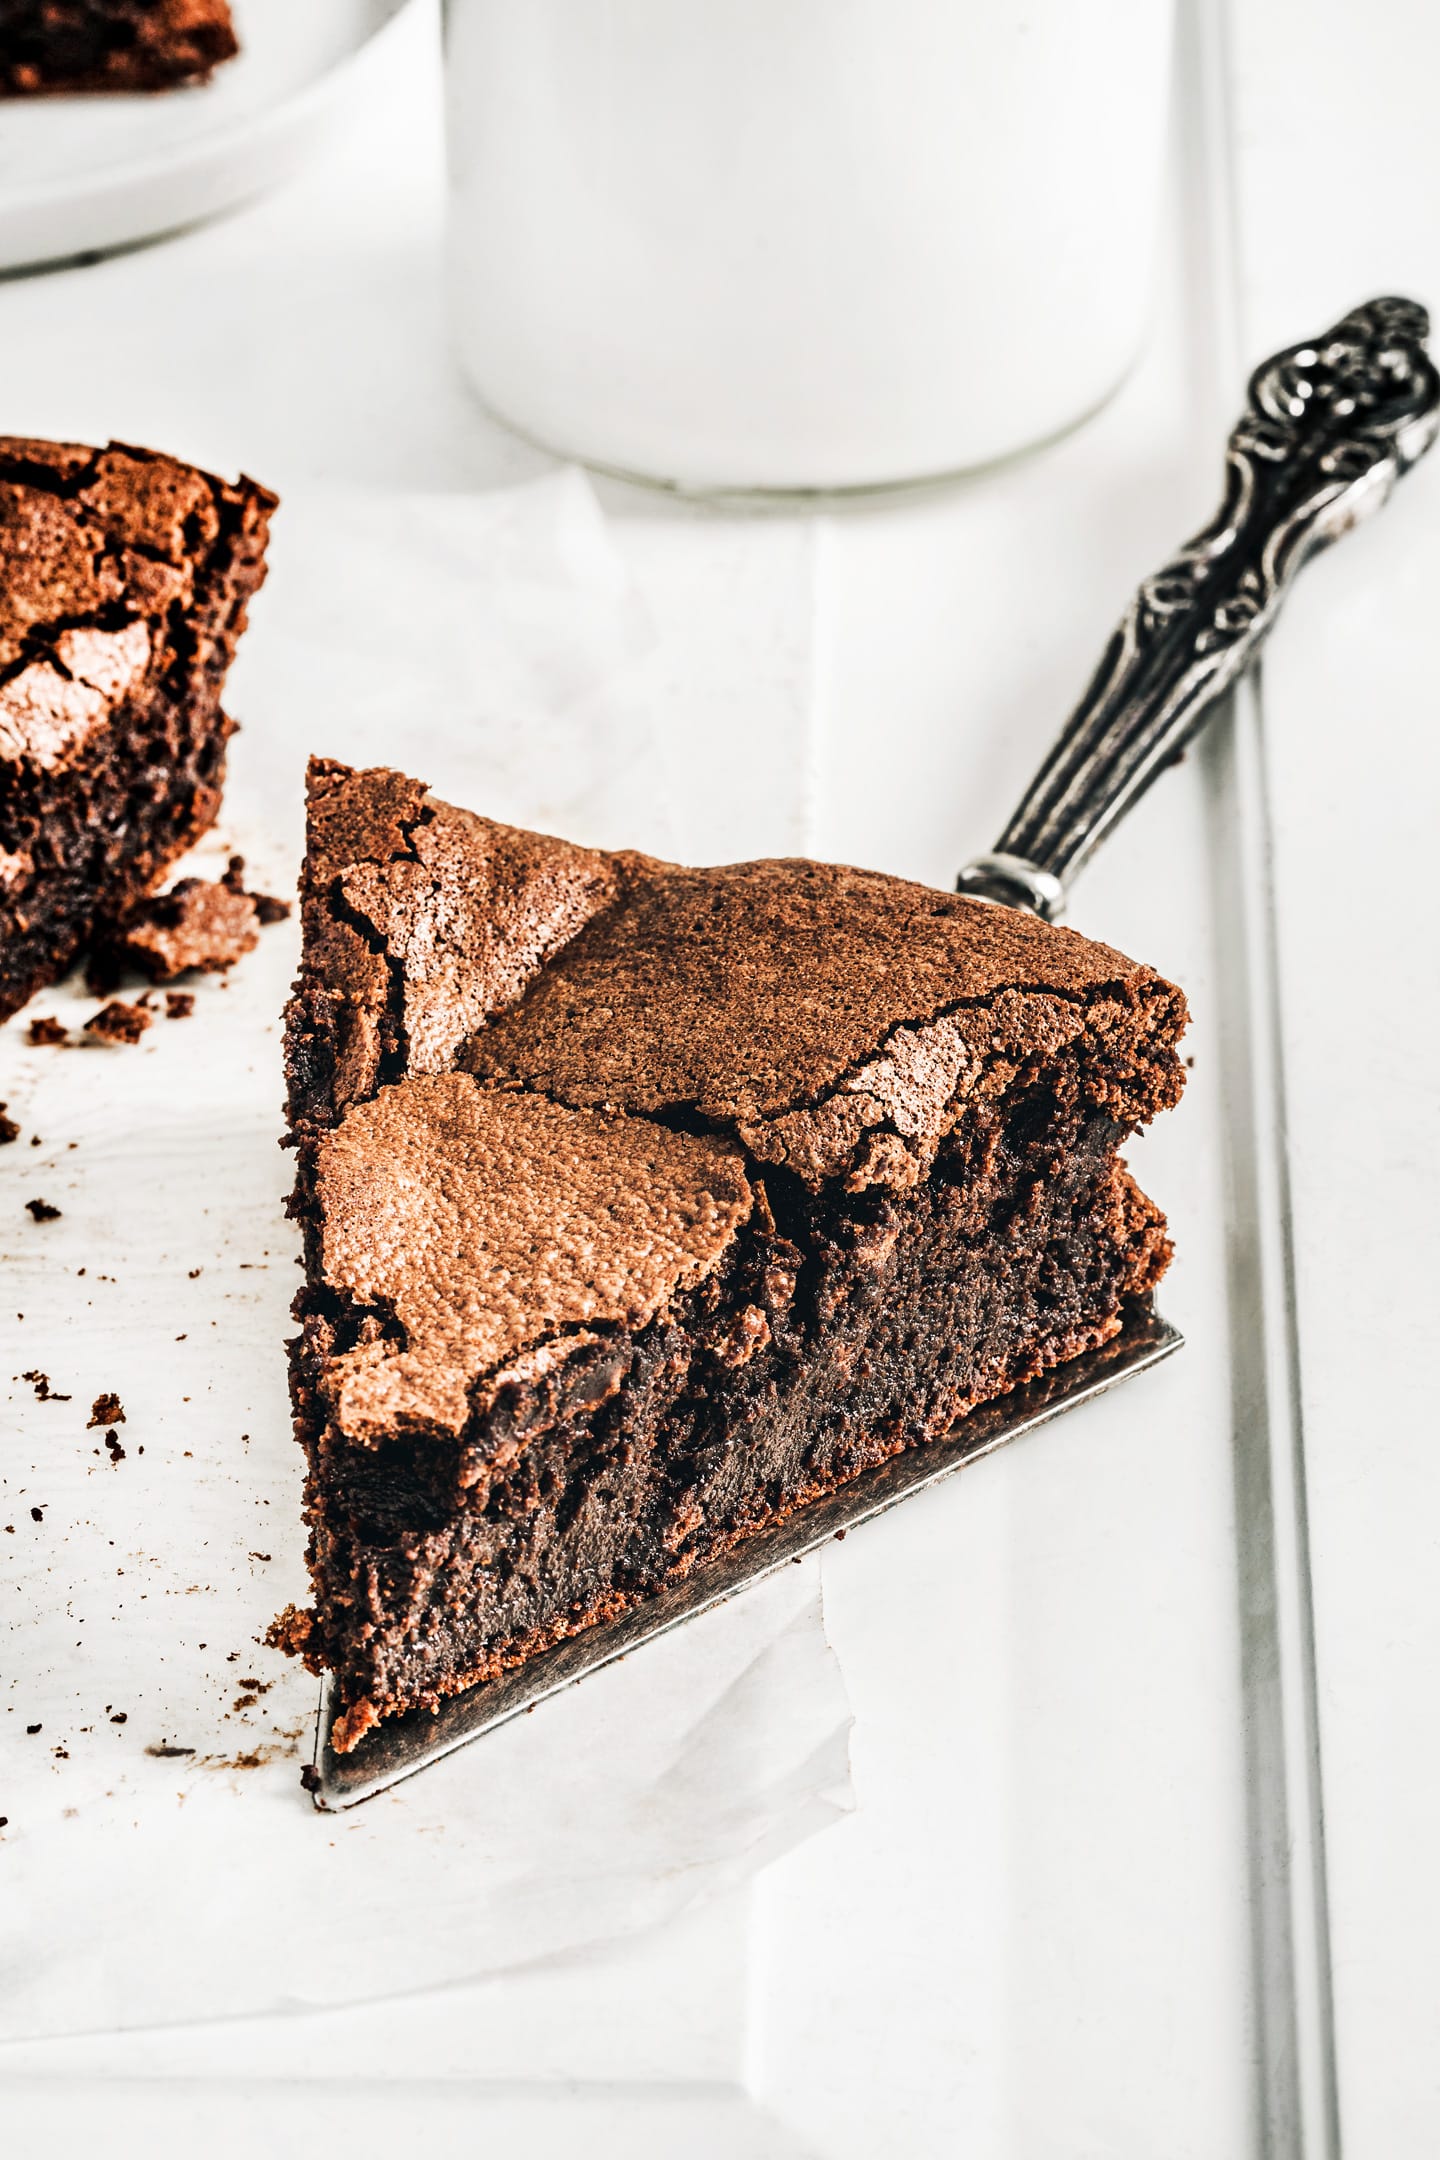 Slice of flourless chocolate cloud cake recipe on a table